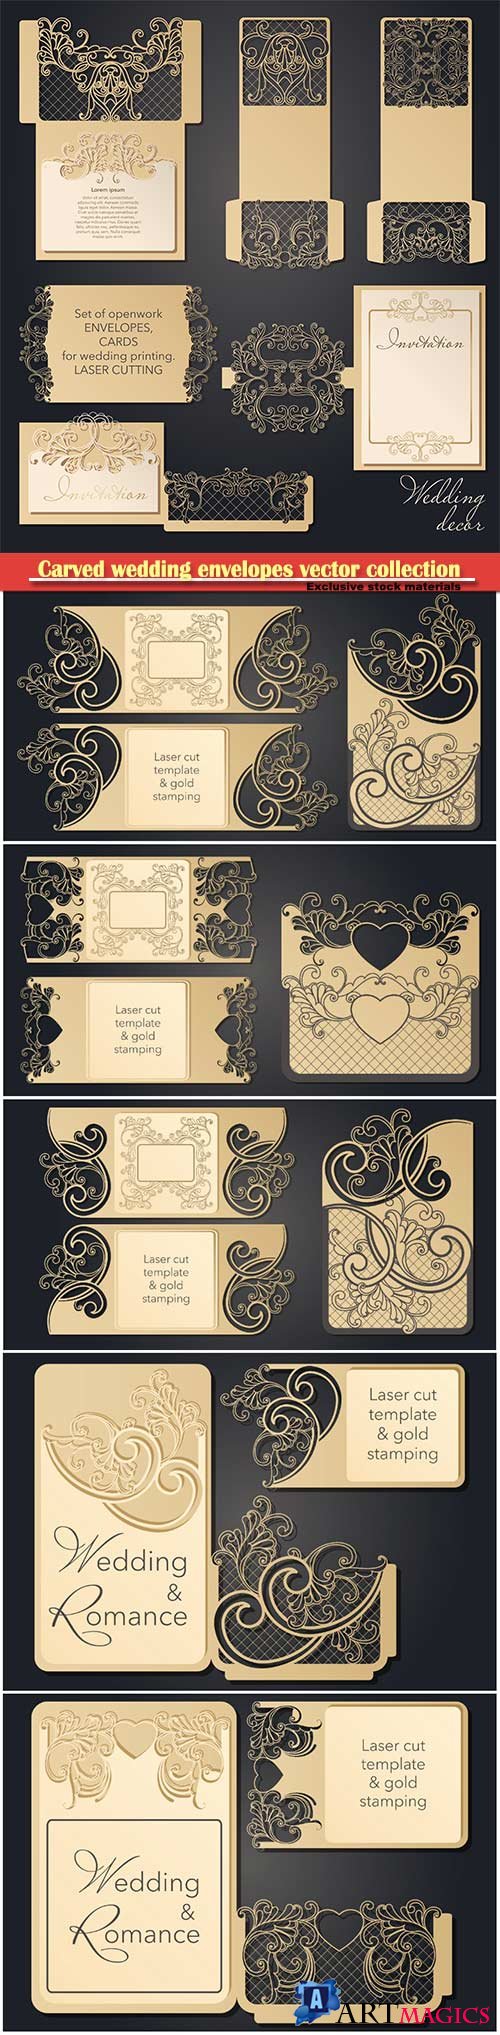 Carved wedding envelopes, pockets for laser cutting, pocket for congratulations, invitations, wedding cards